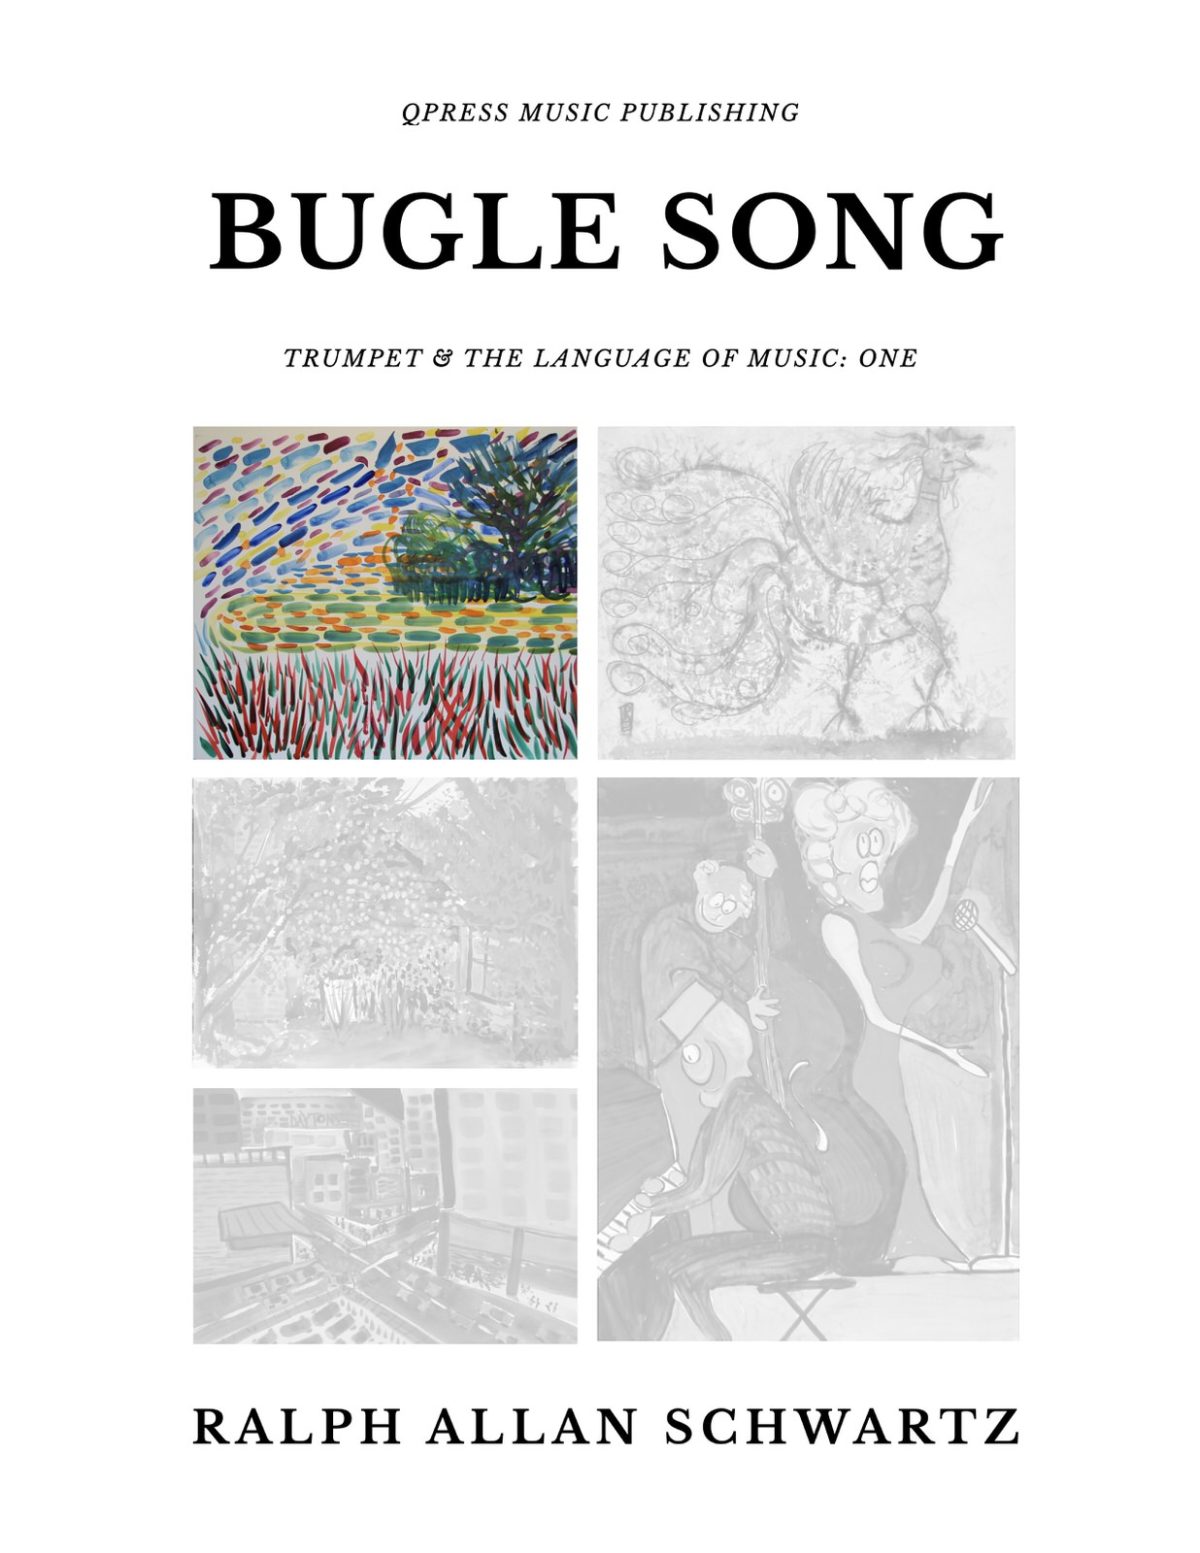 Schwartz, TLM 1, Bugle Song-p001